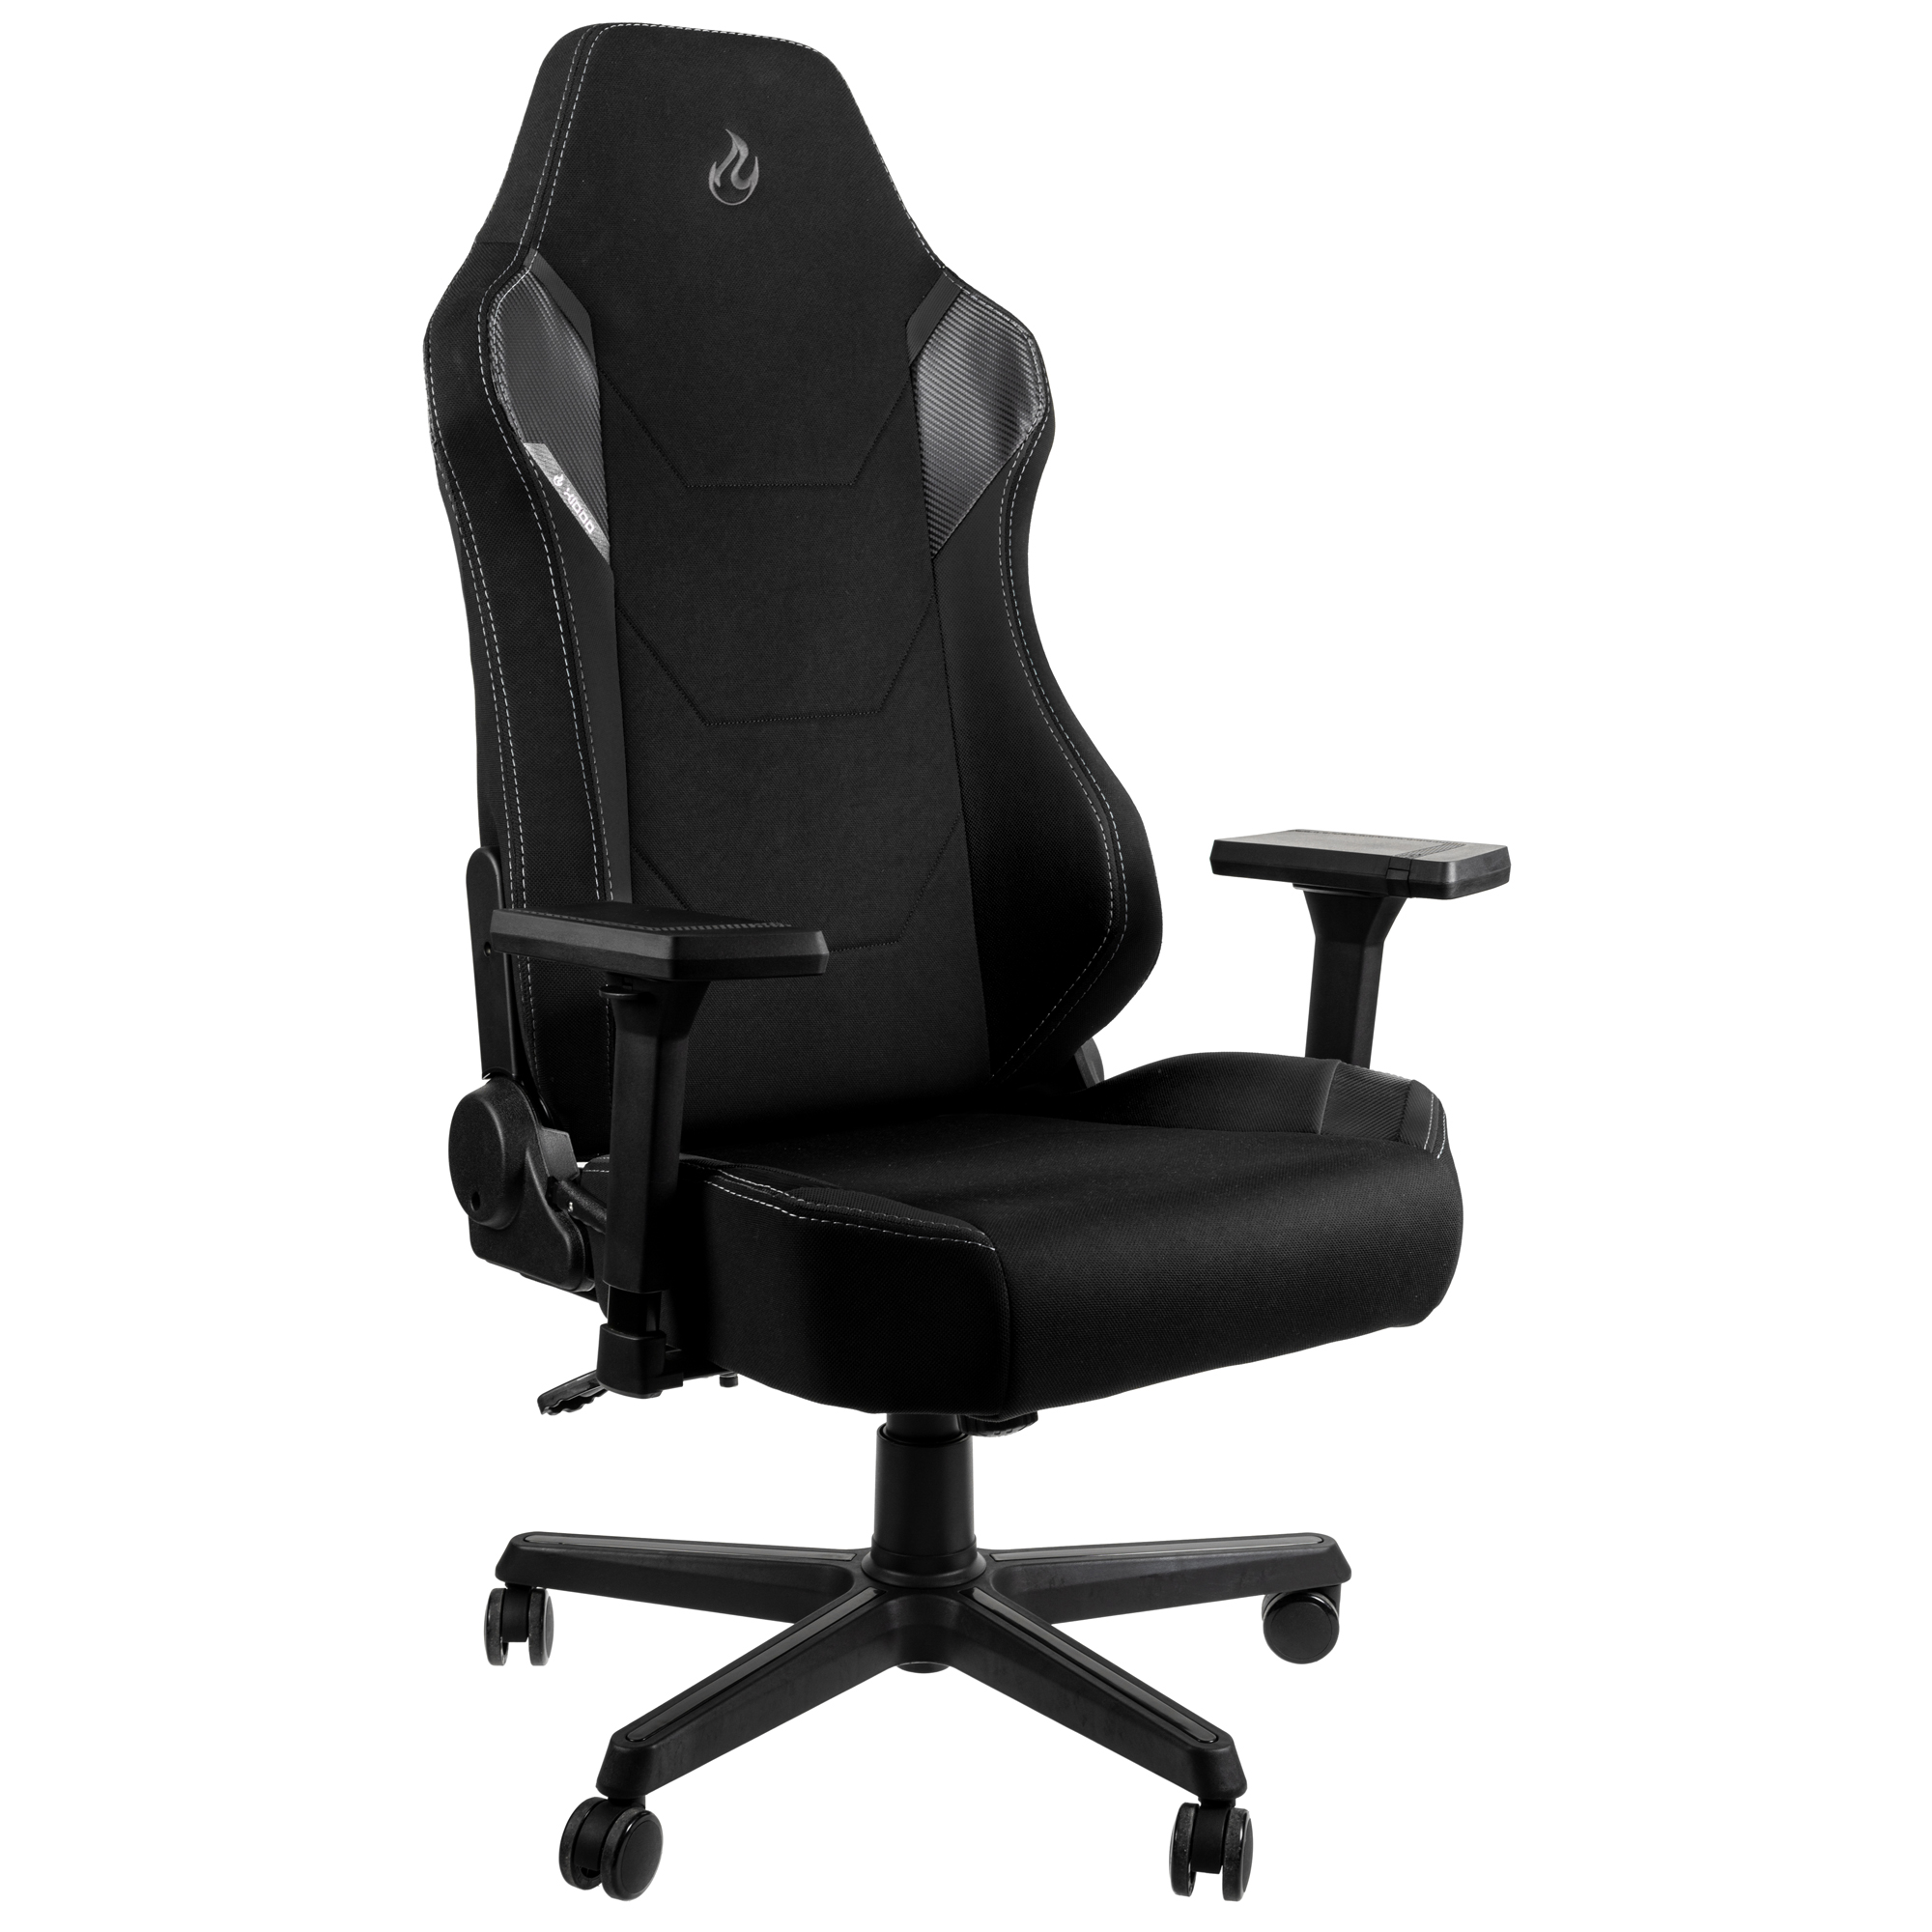 Nitro Concepts - X1000 Gaming Chair - Black